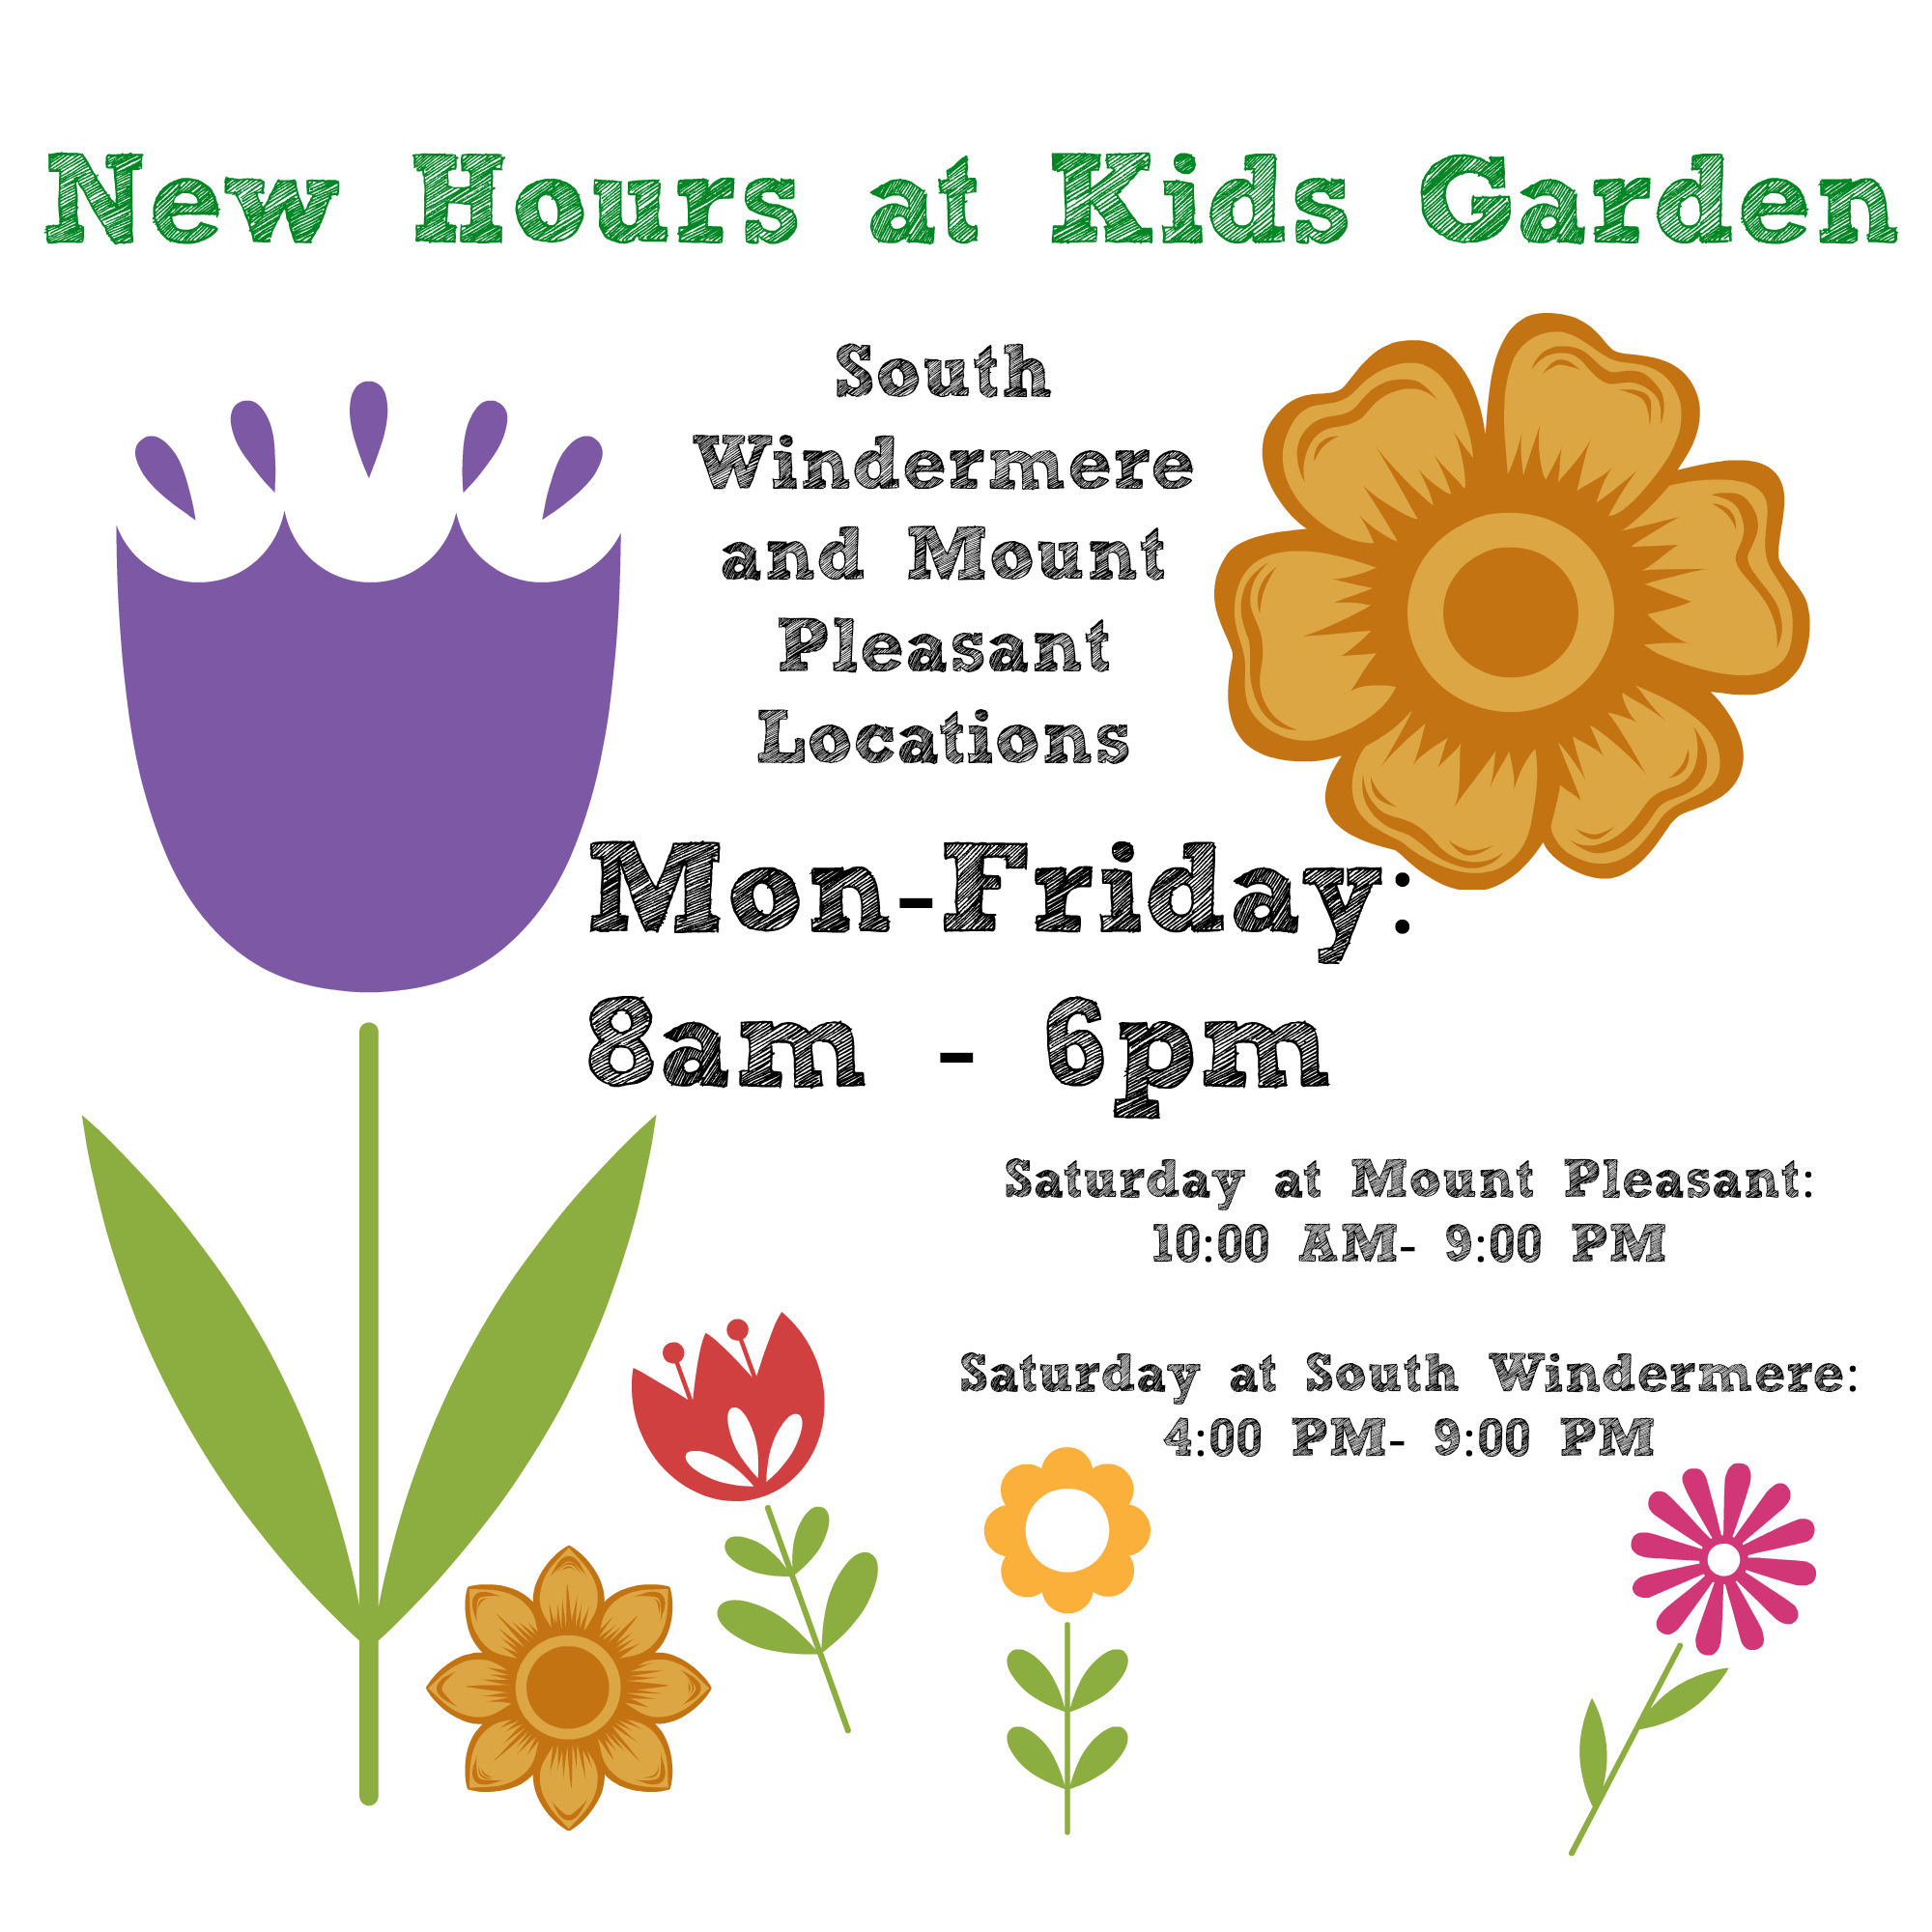 The new schedule at Kids Garden Columbia.